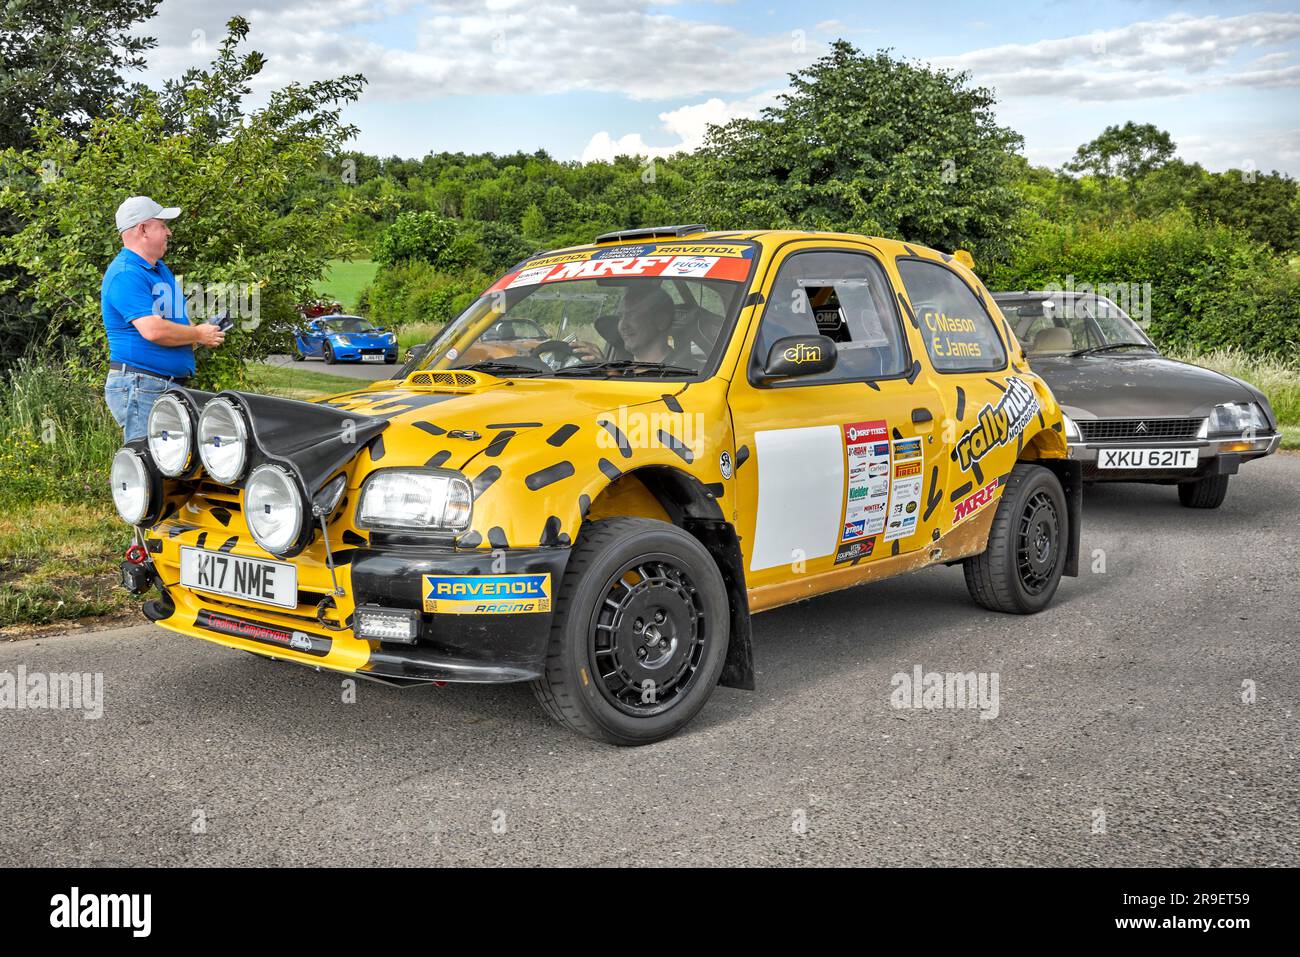 Nissan Micra LX Rally car 1994 Championship winning motor sport competition car Stock Photo